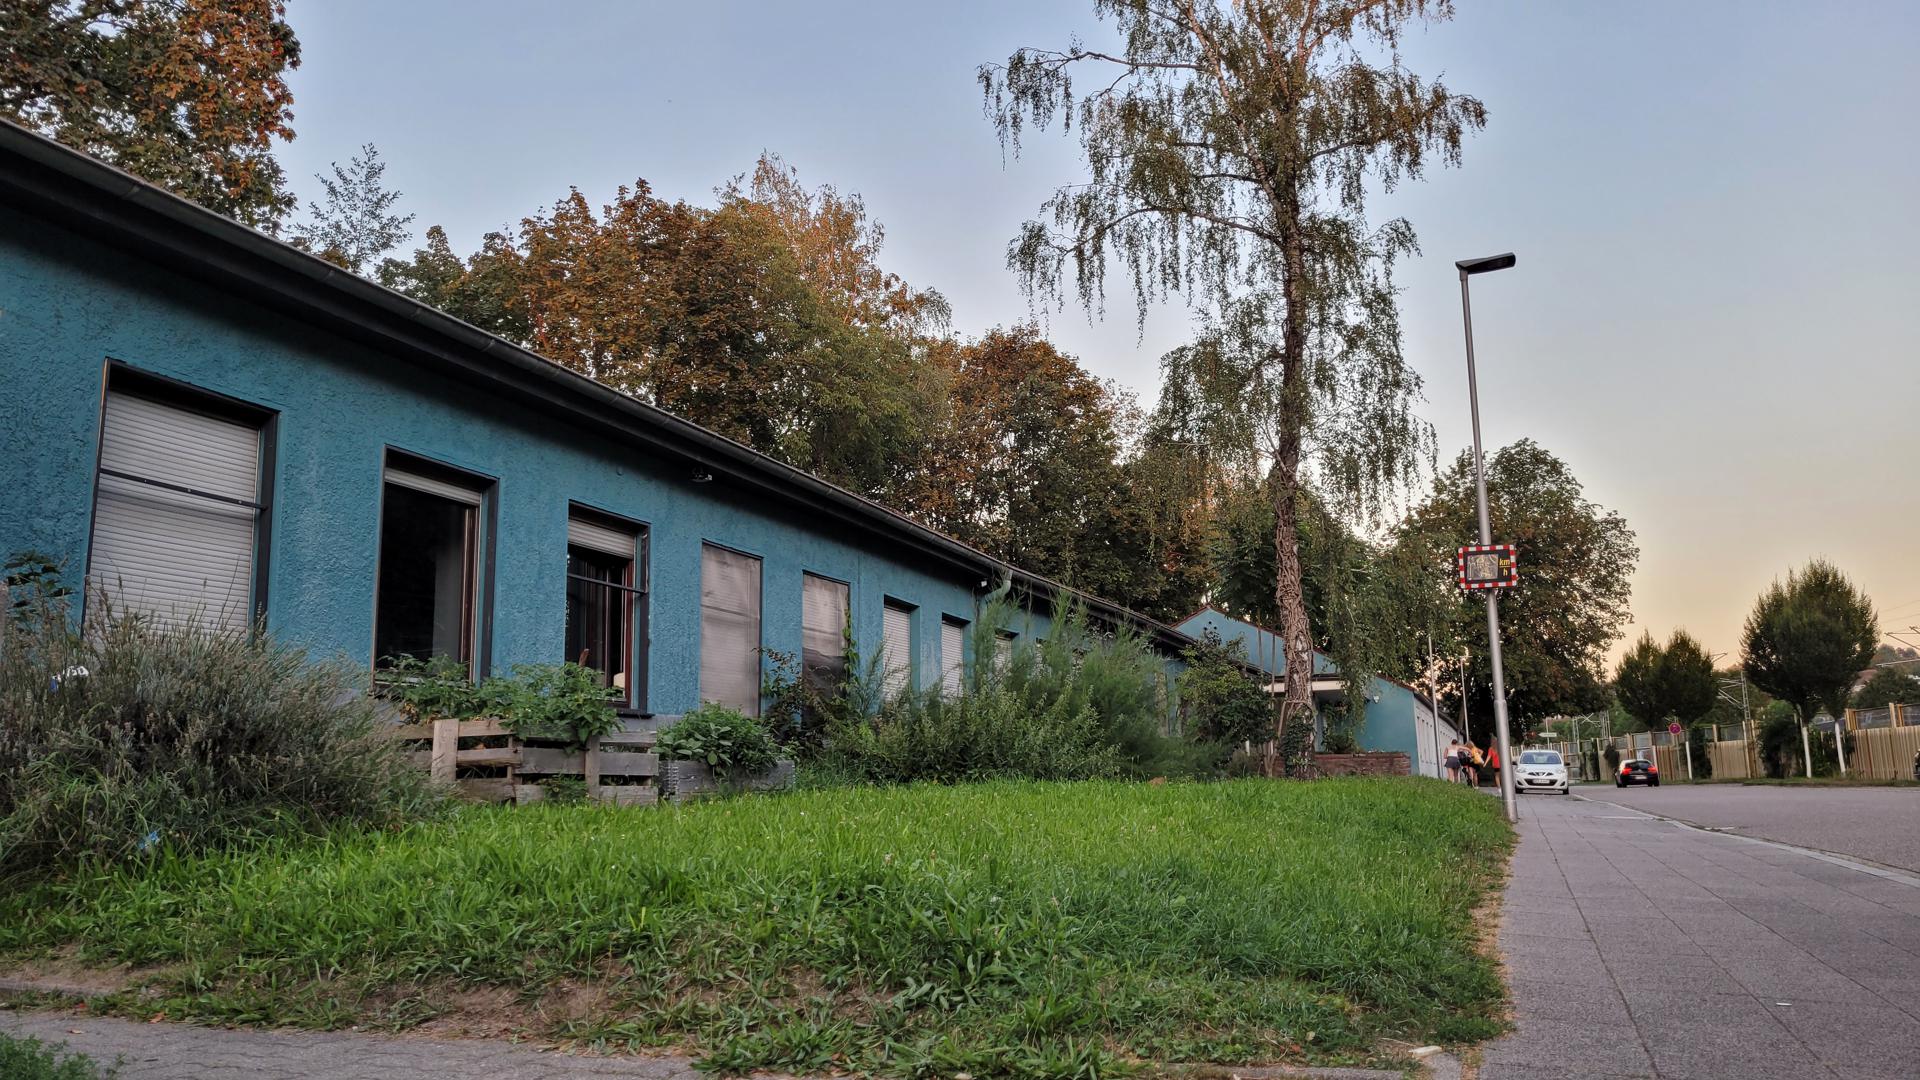 Flüchtlings- und Jugendunterkunft in Grötzingen